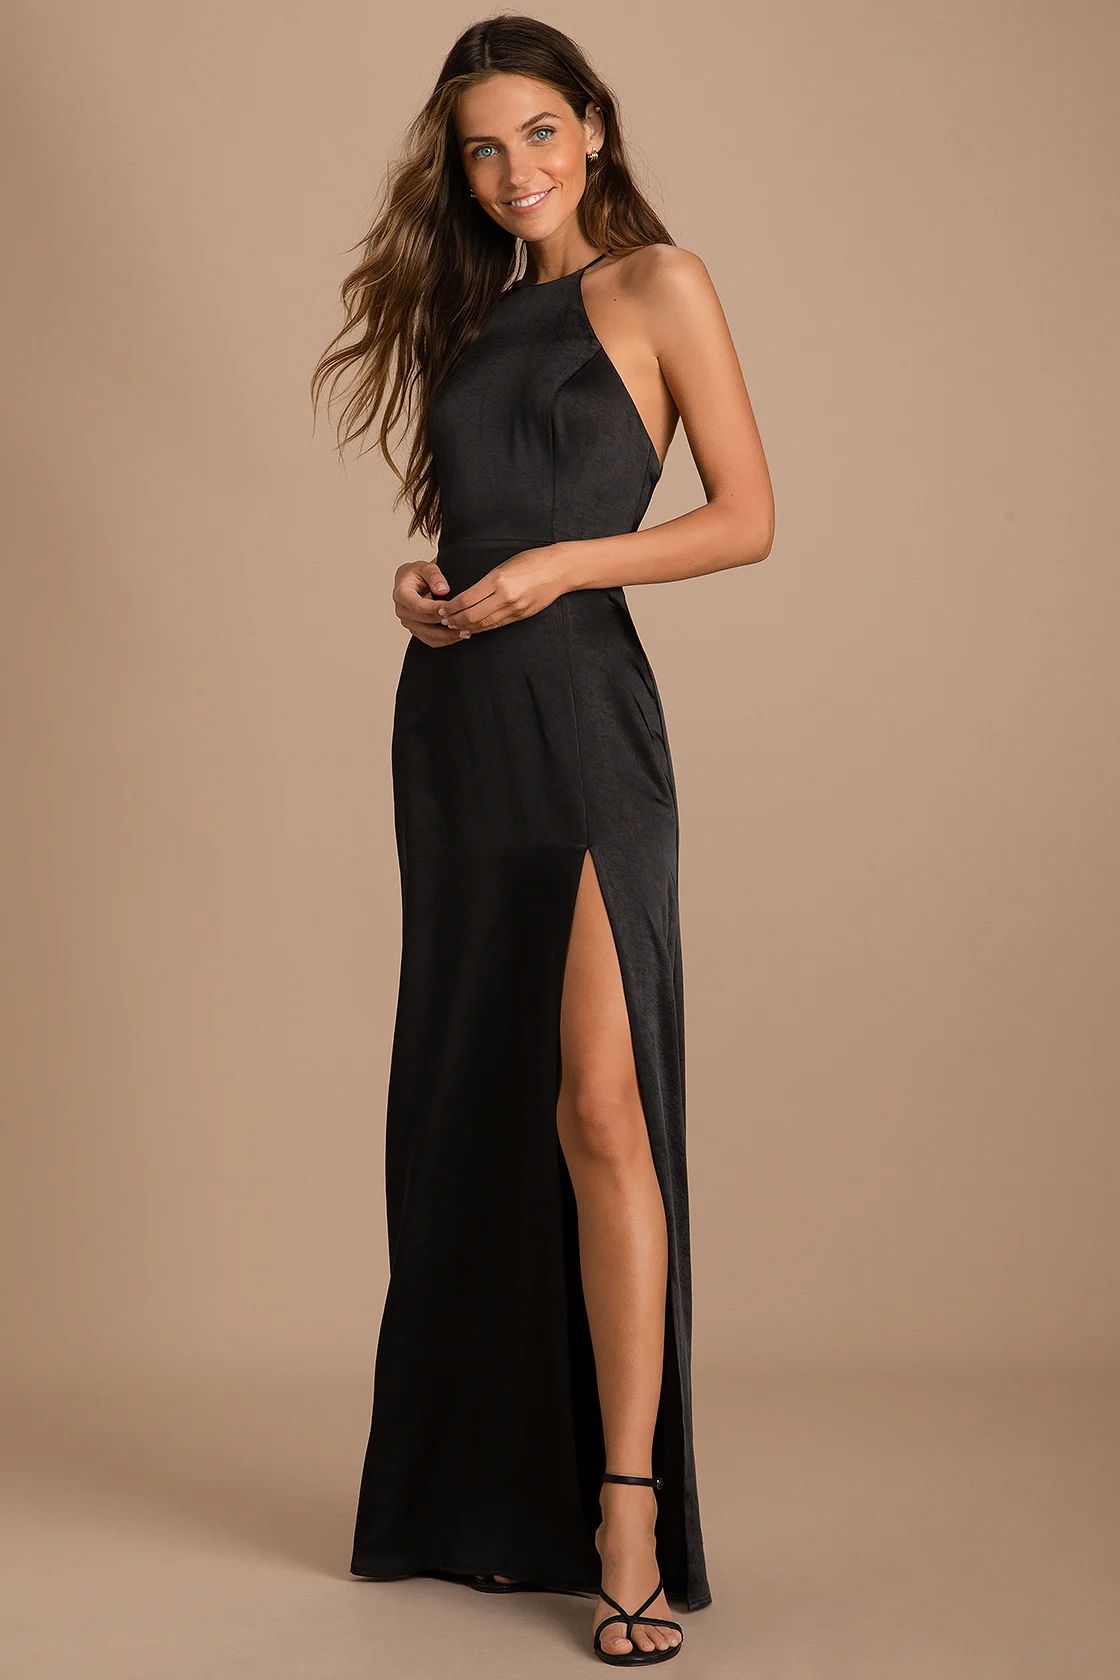 Make it Elegant Black Satin Strappy Maxi Dress | Lulus (US)